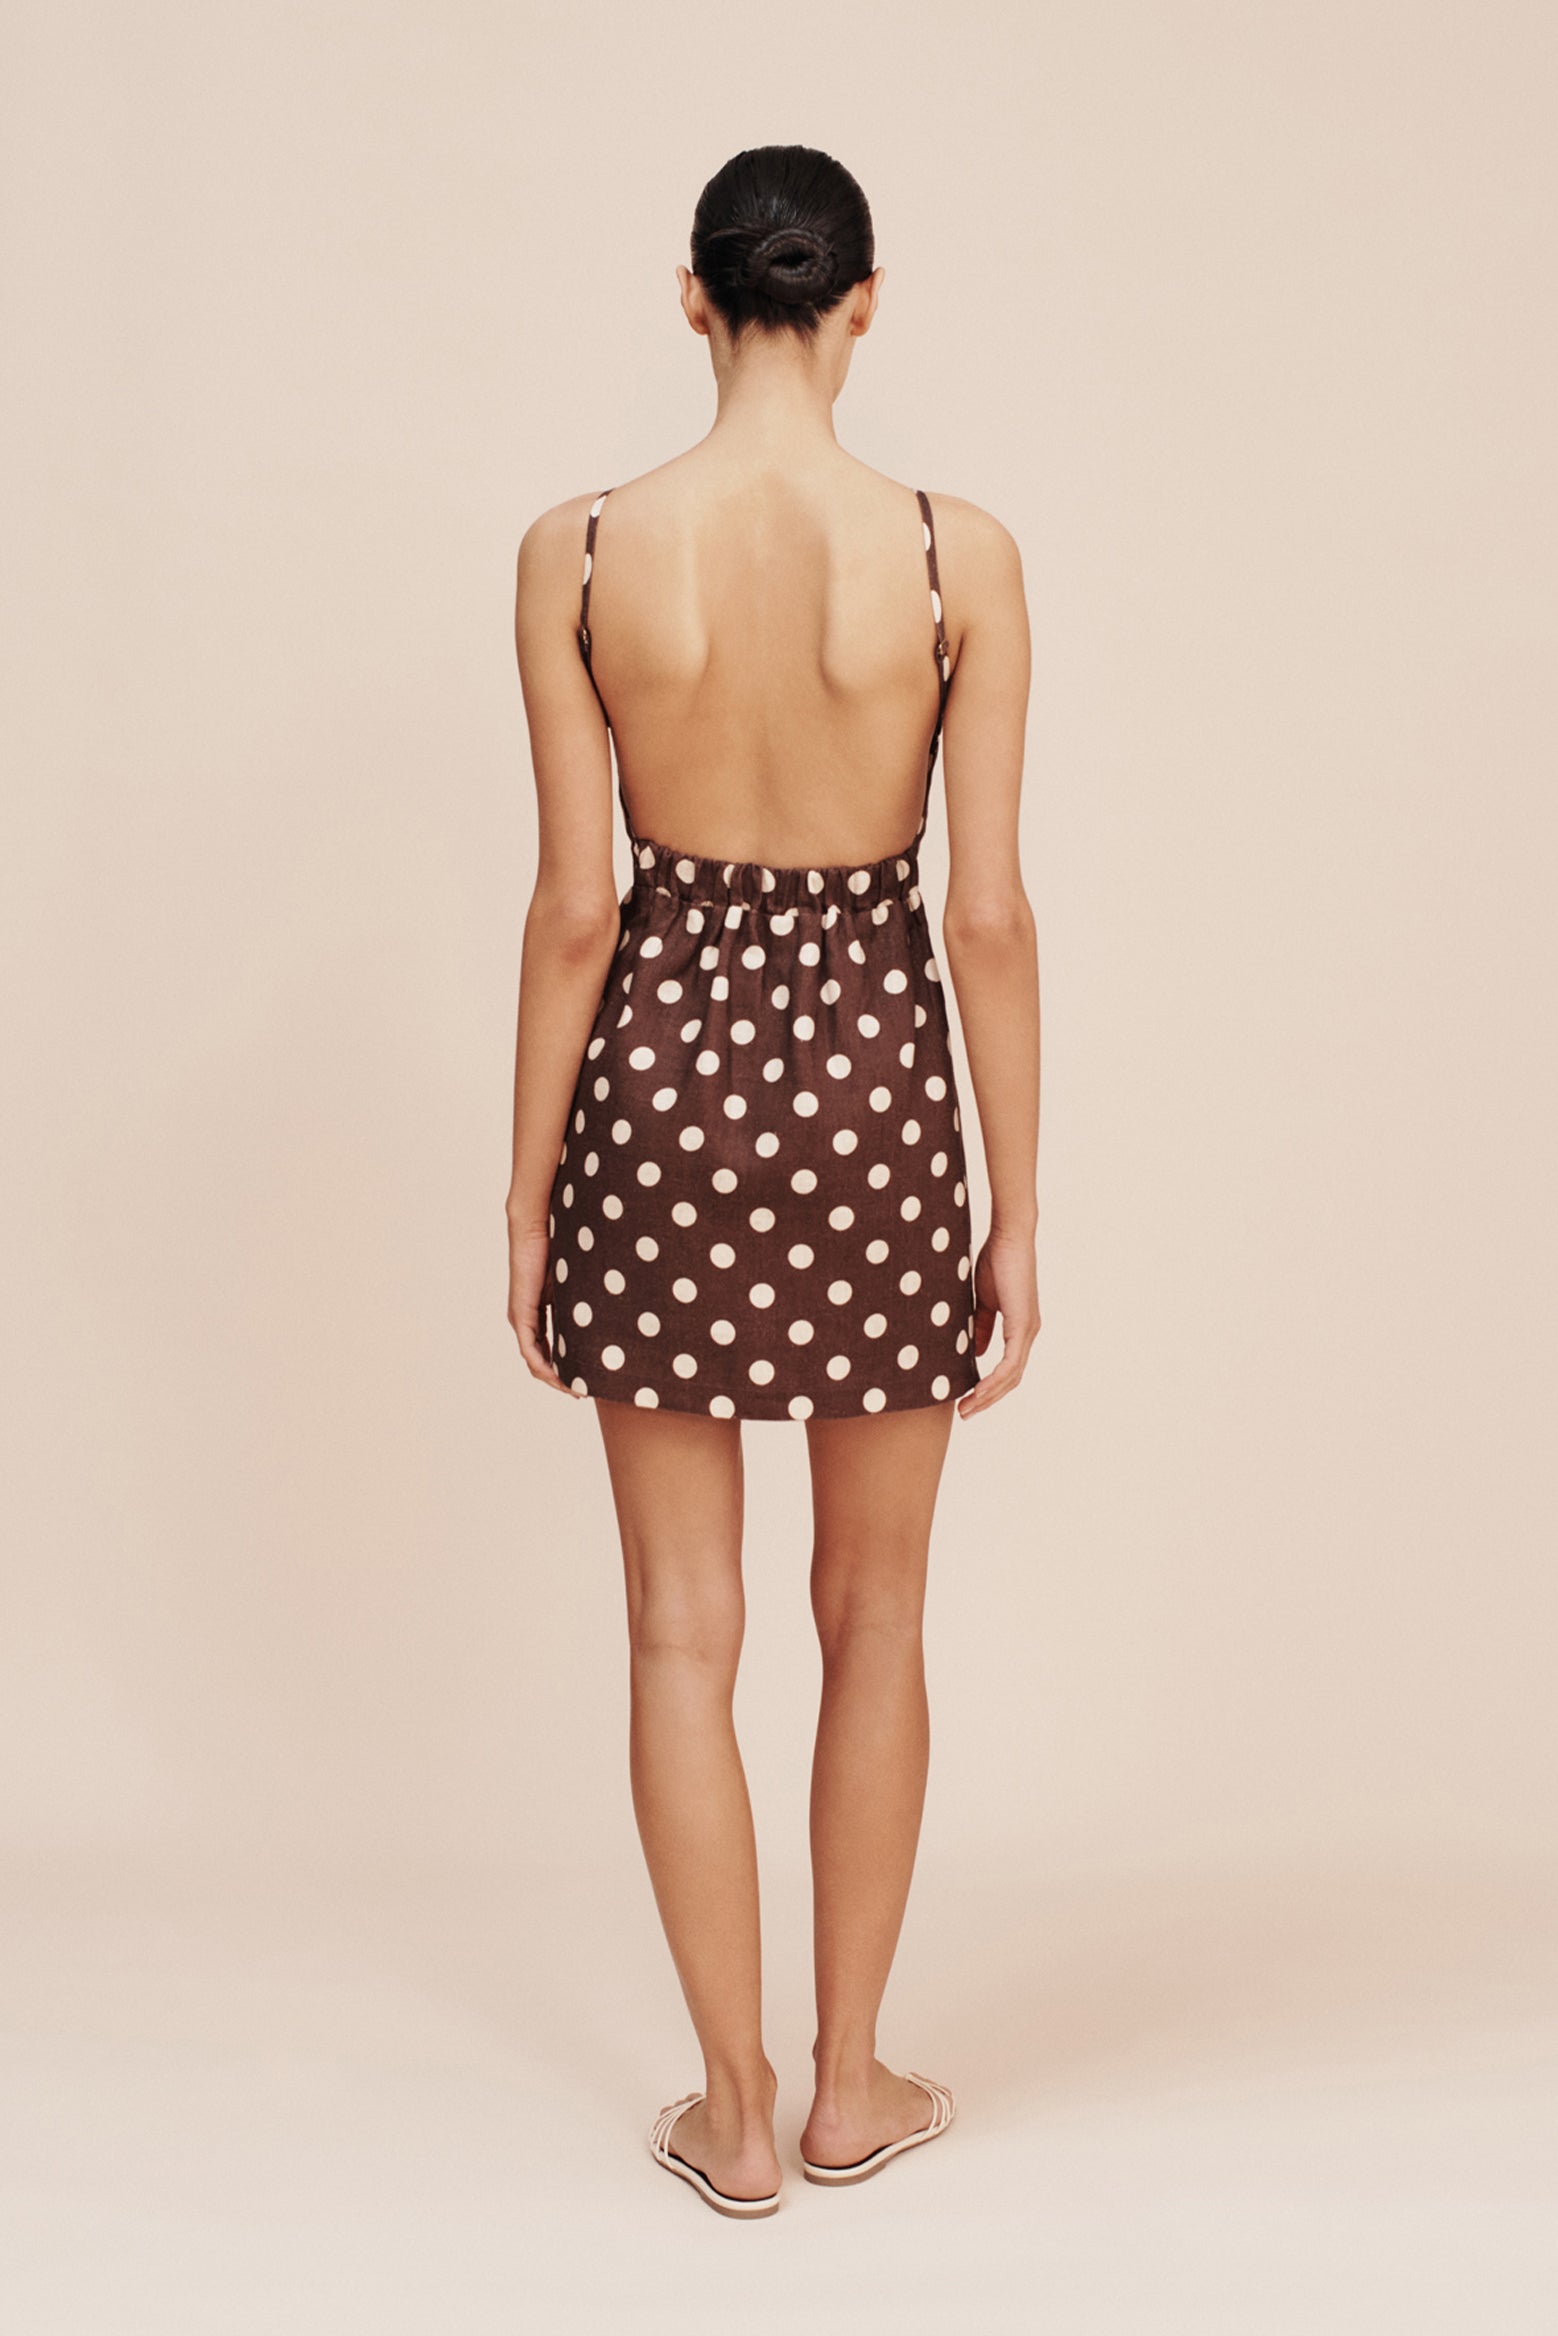 Posse Lori Mini Dress in Polka Dot available at The New Trend Australia.